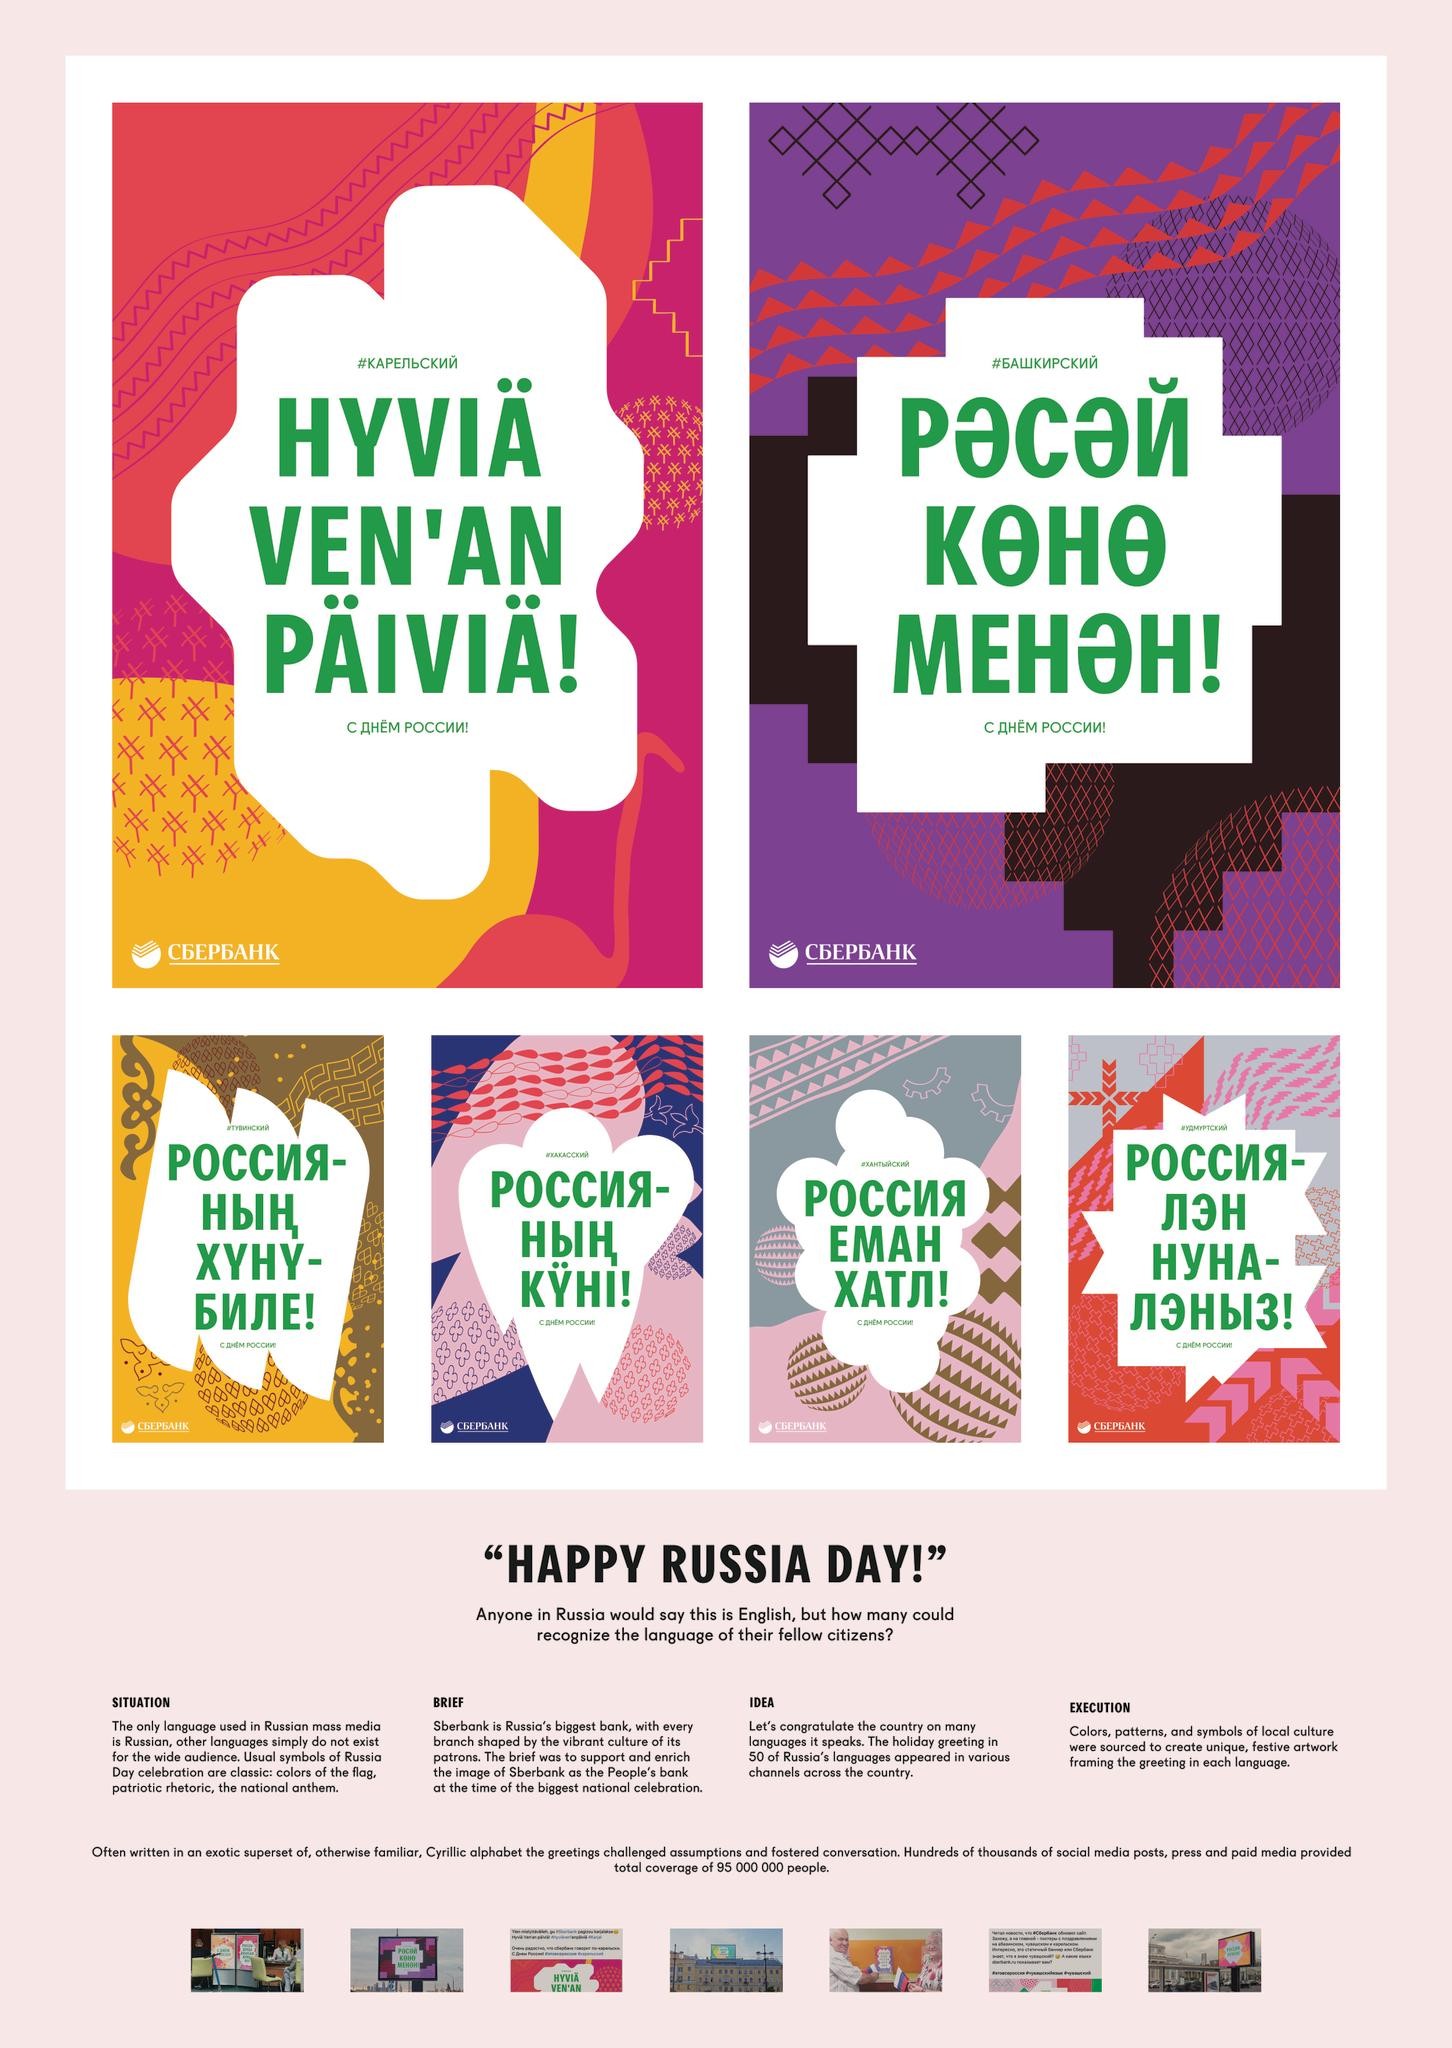 HAPPY RUSSIA DAY!